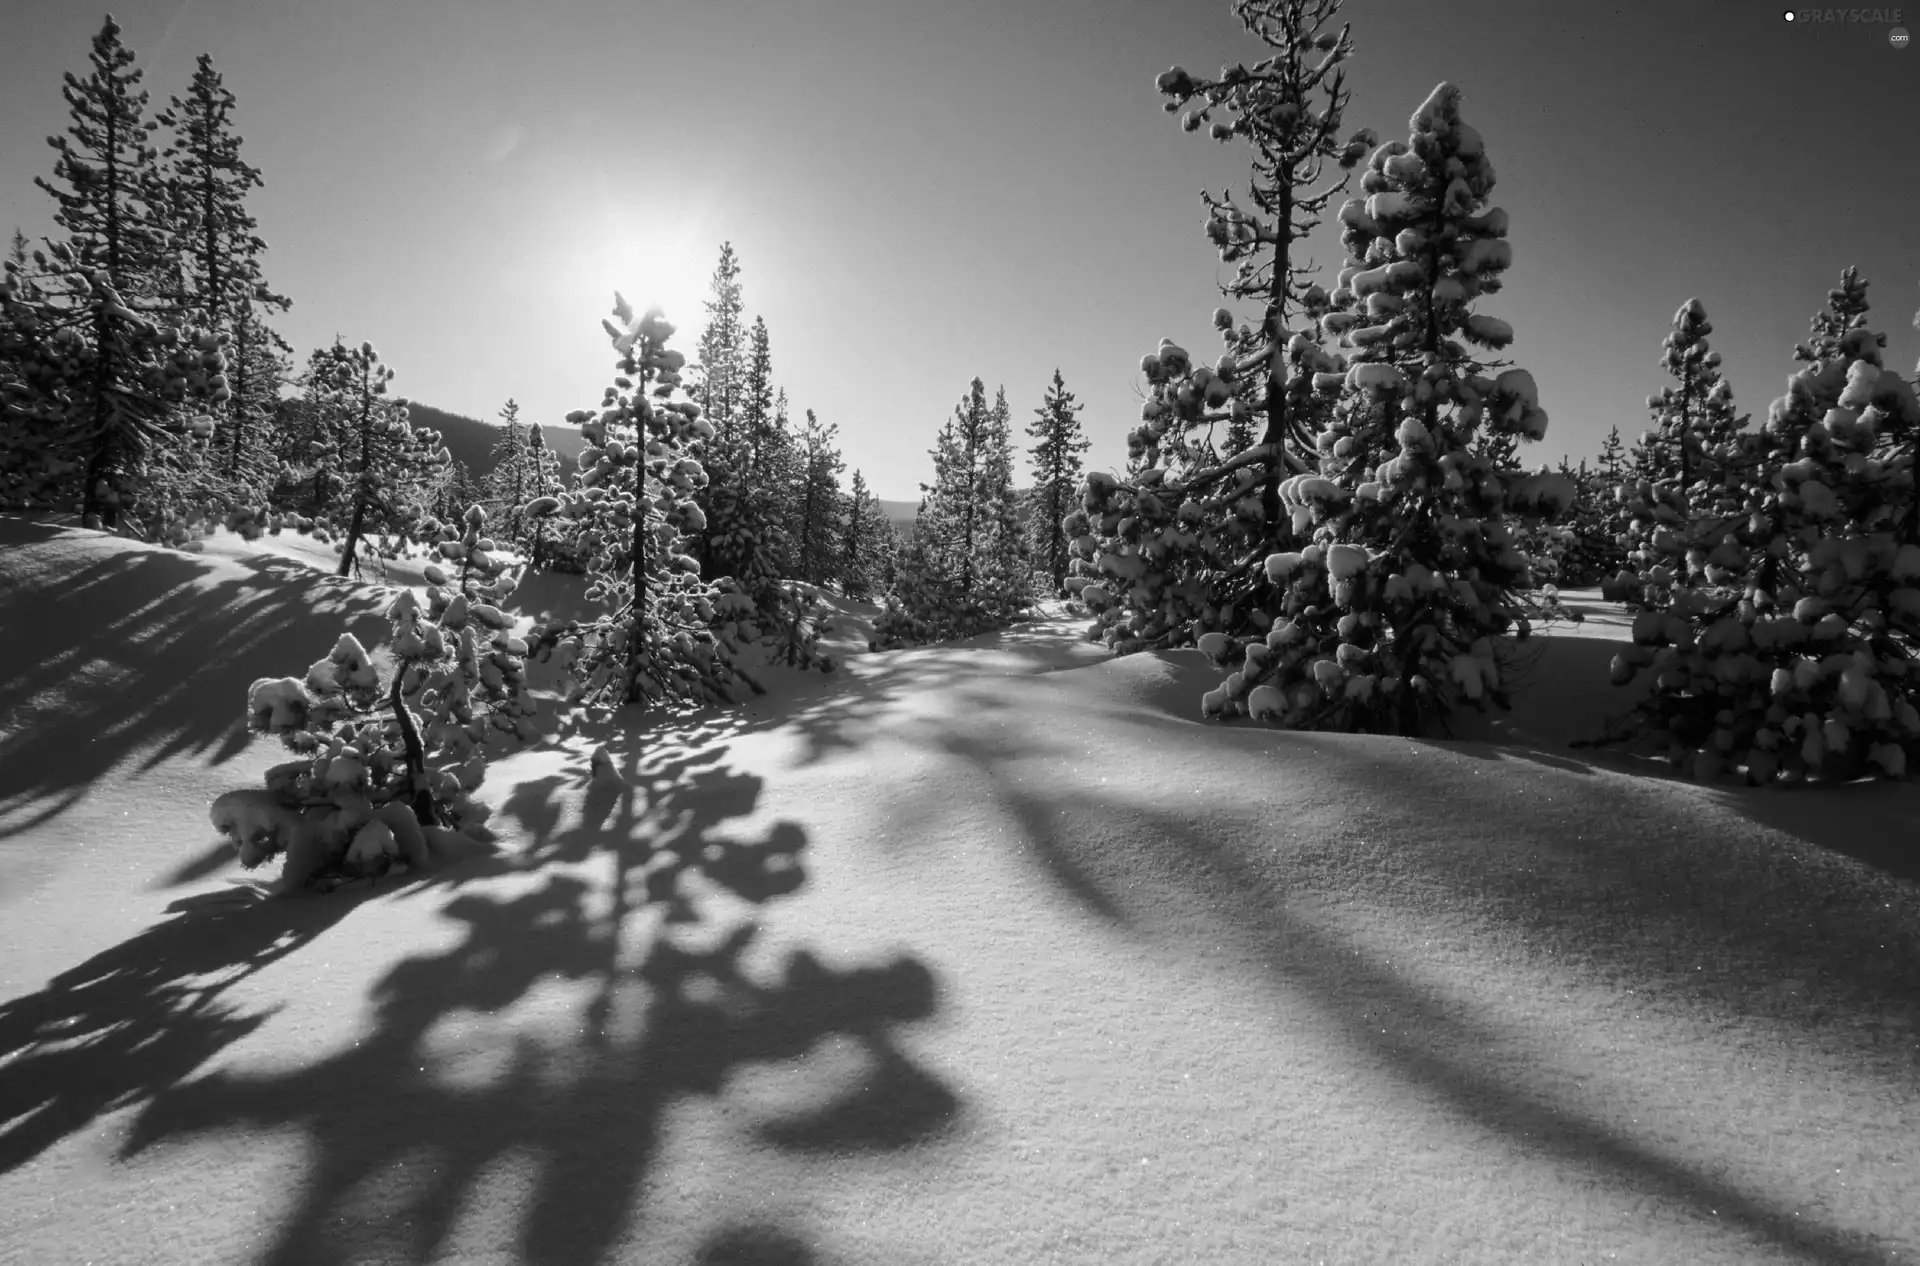 rays, sun, Covered, snow, Sapling